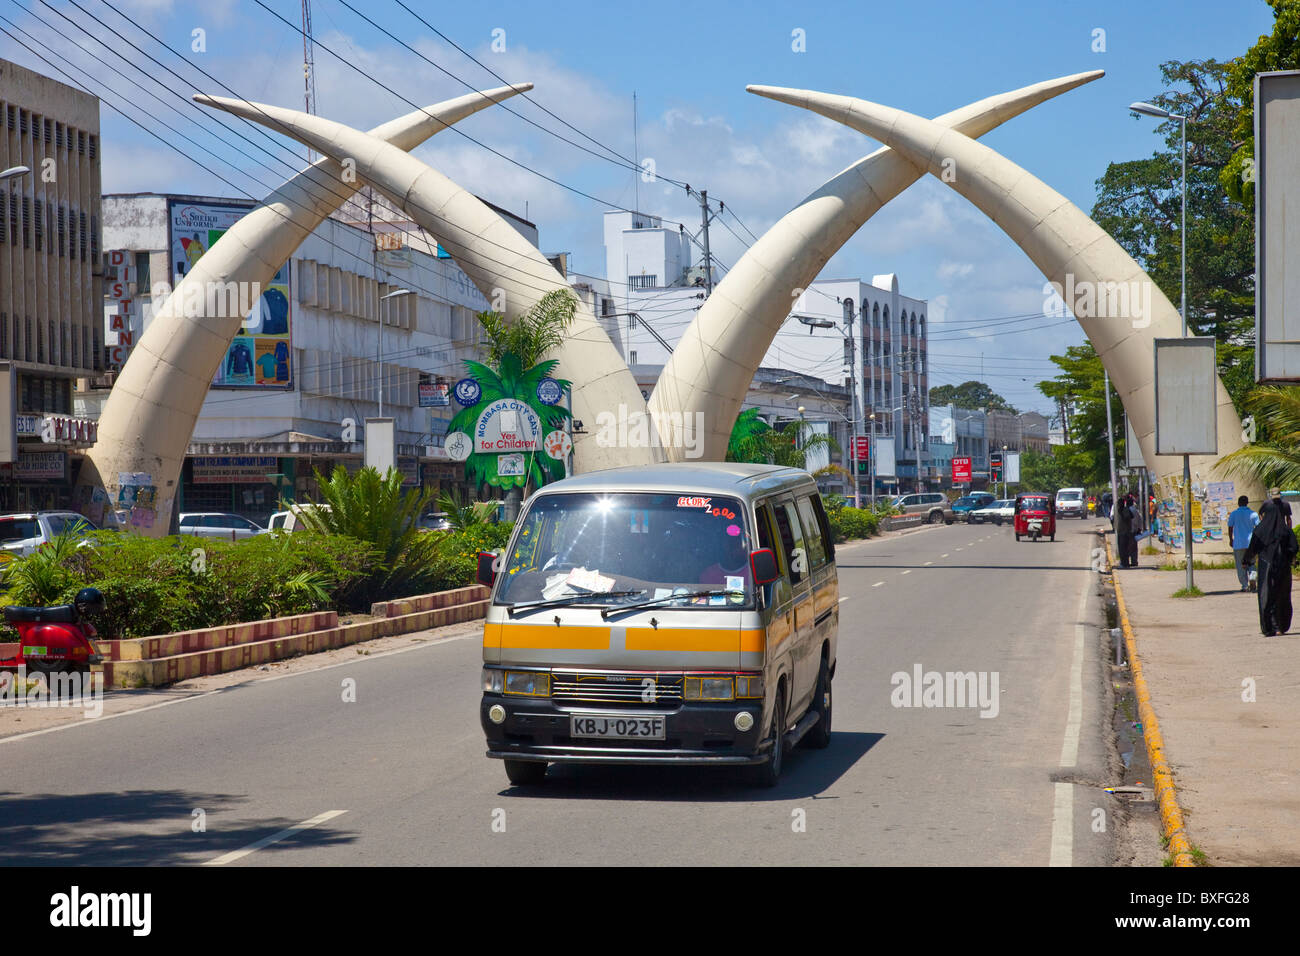 Matatu, Tusks, Moi Avenue, Mombasa, Kenya Stock Photo